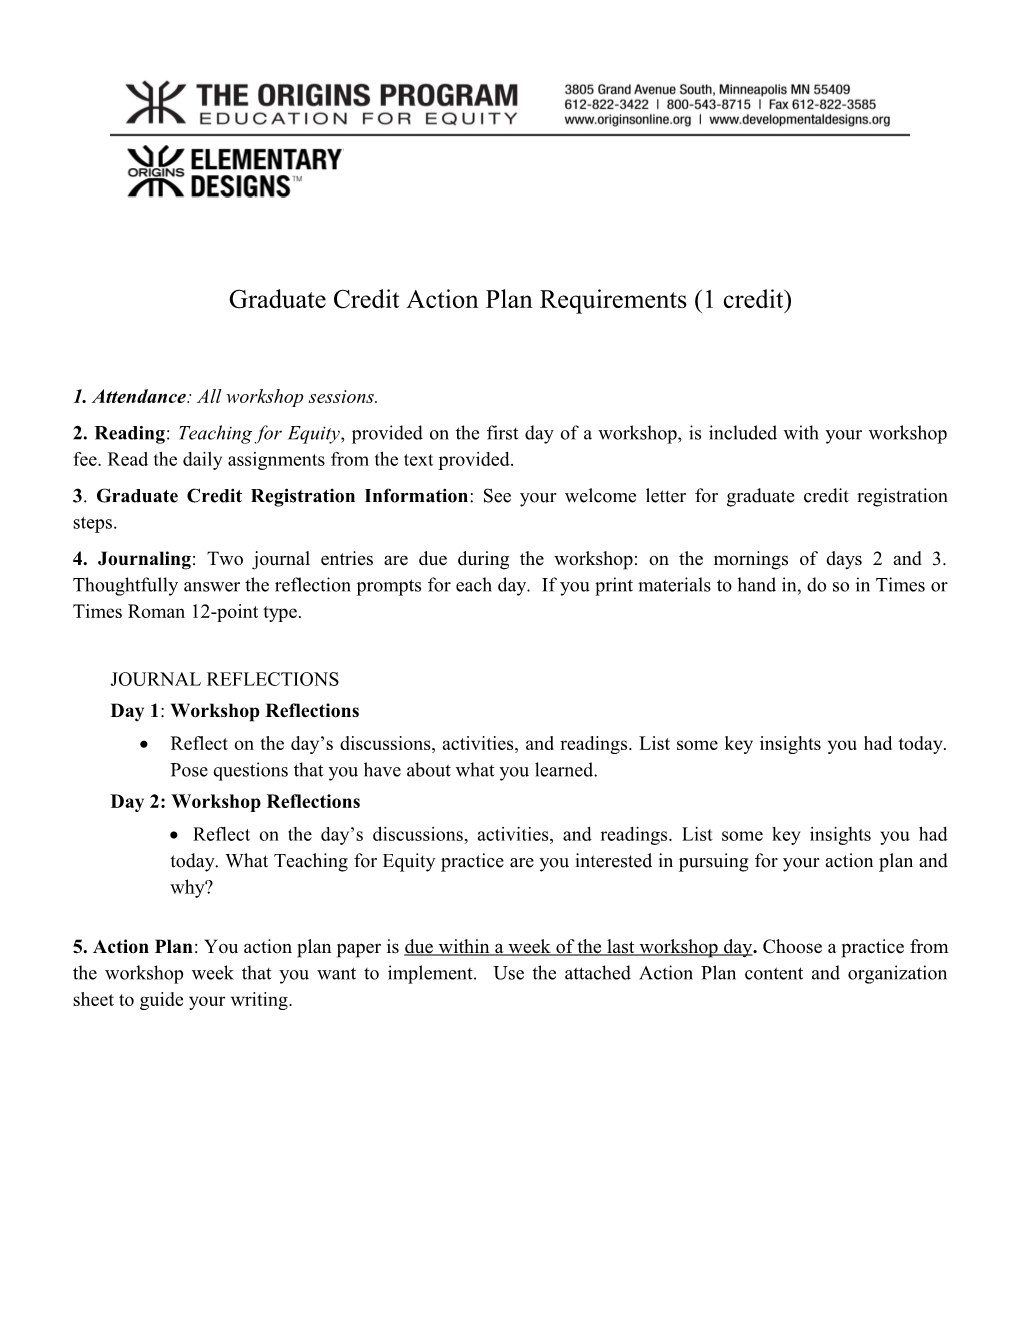 Graduate Credit Action Plan Requirements (1 Credit)